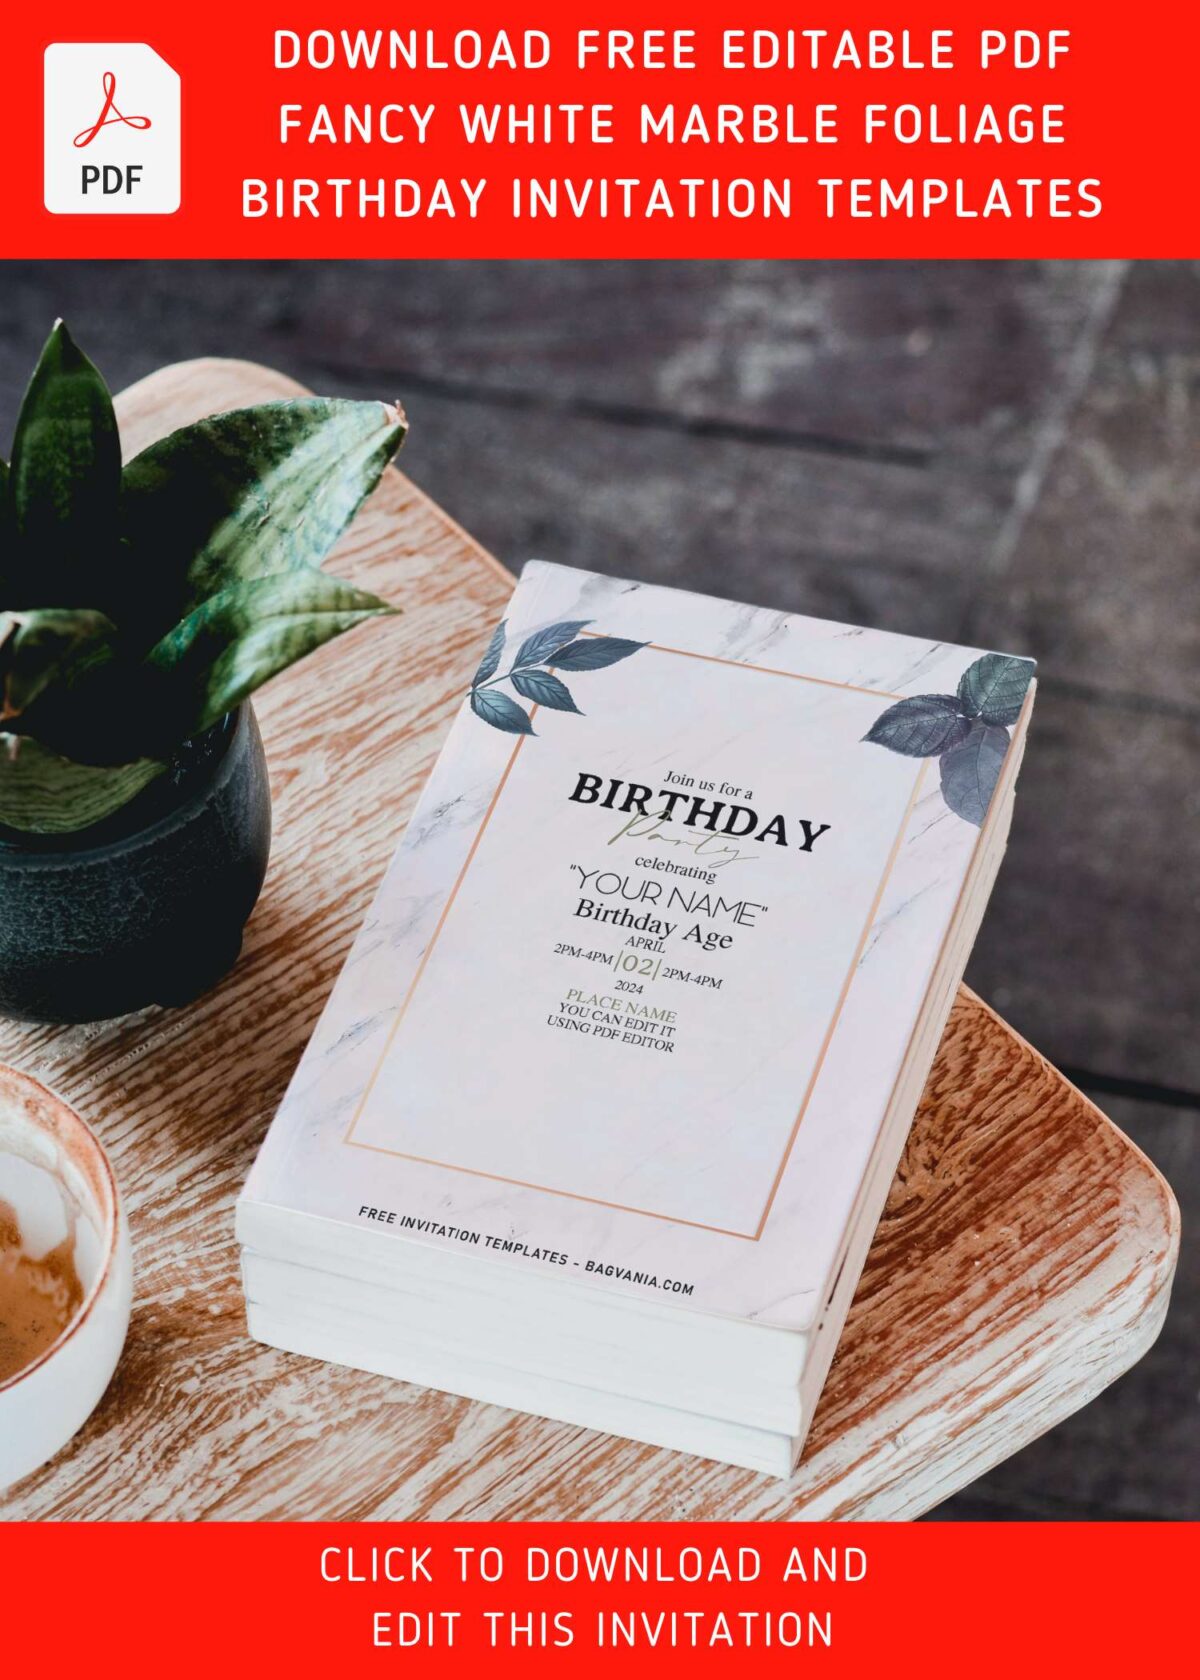 (Free Editable PDF) Splendid White Marble & Foliage Birthday Invitation Templates with 